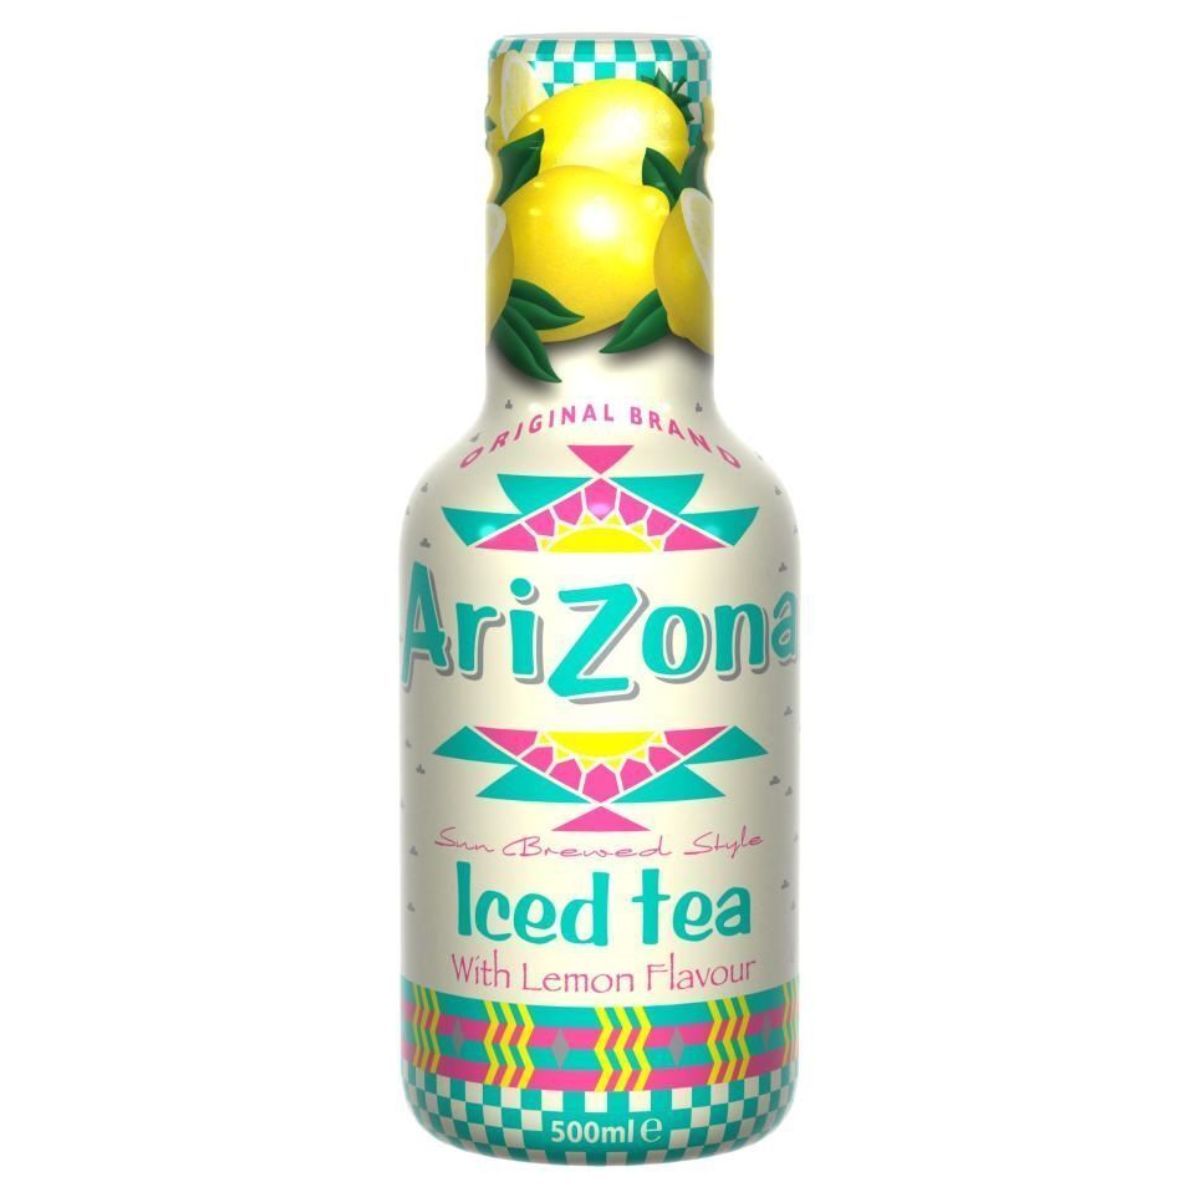 A bottle of Arizona - Iced Tea Lemon Flavour - 500ml.